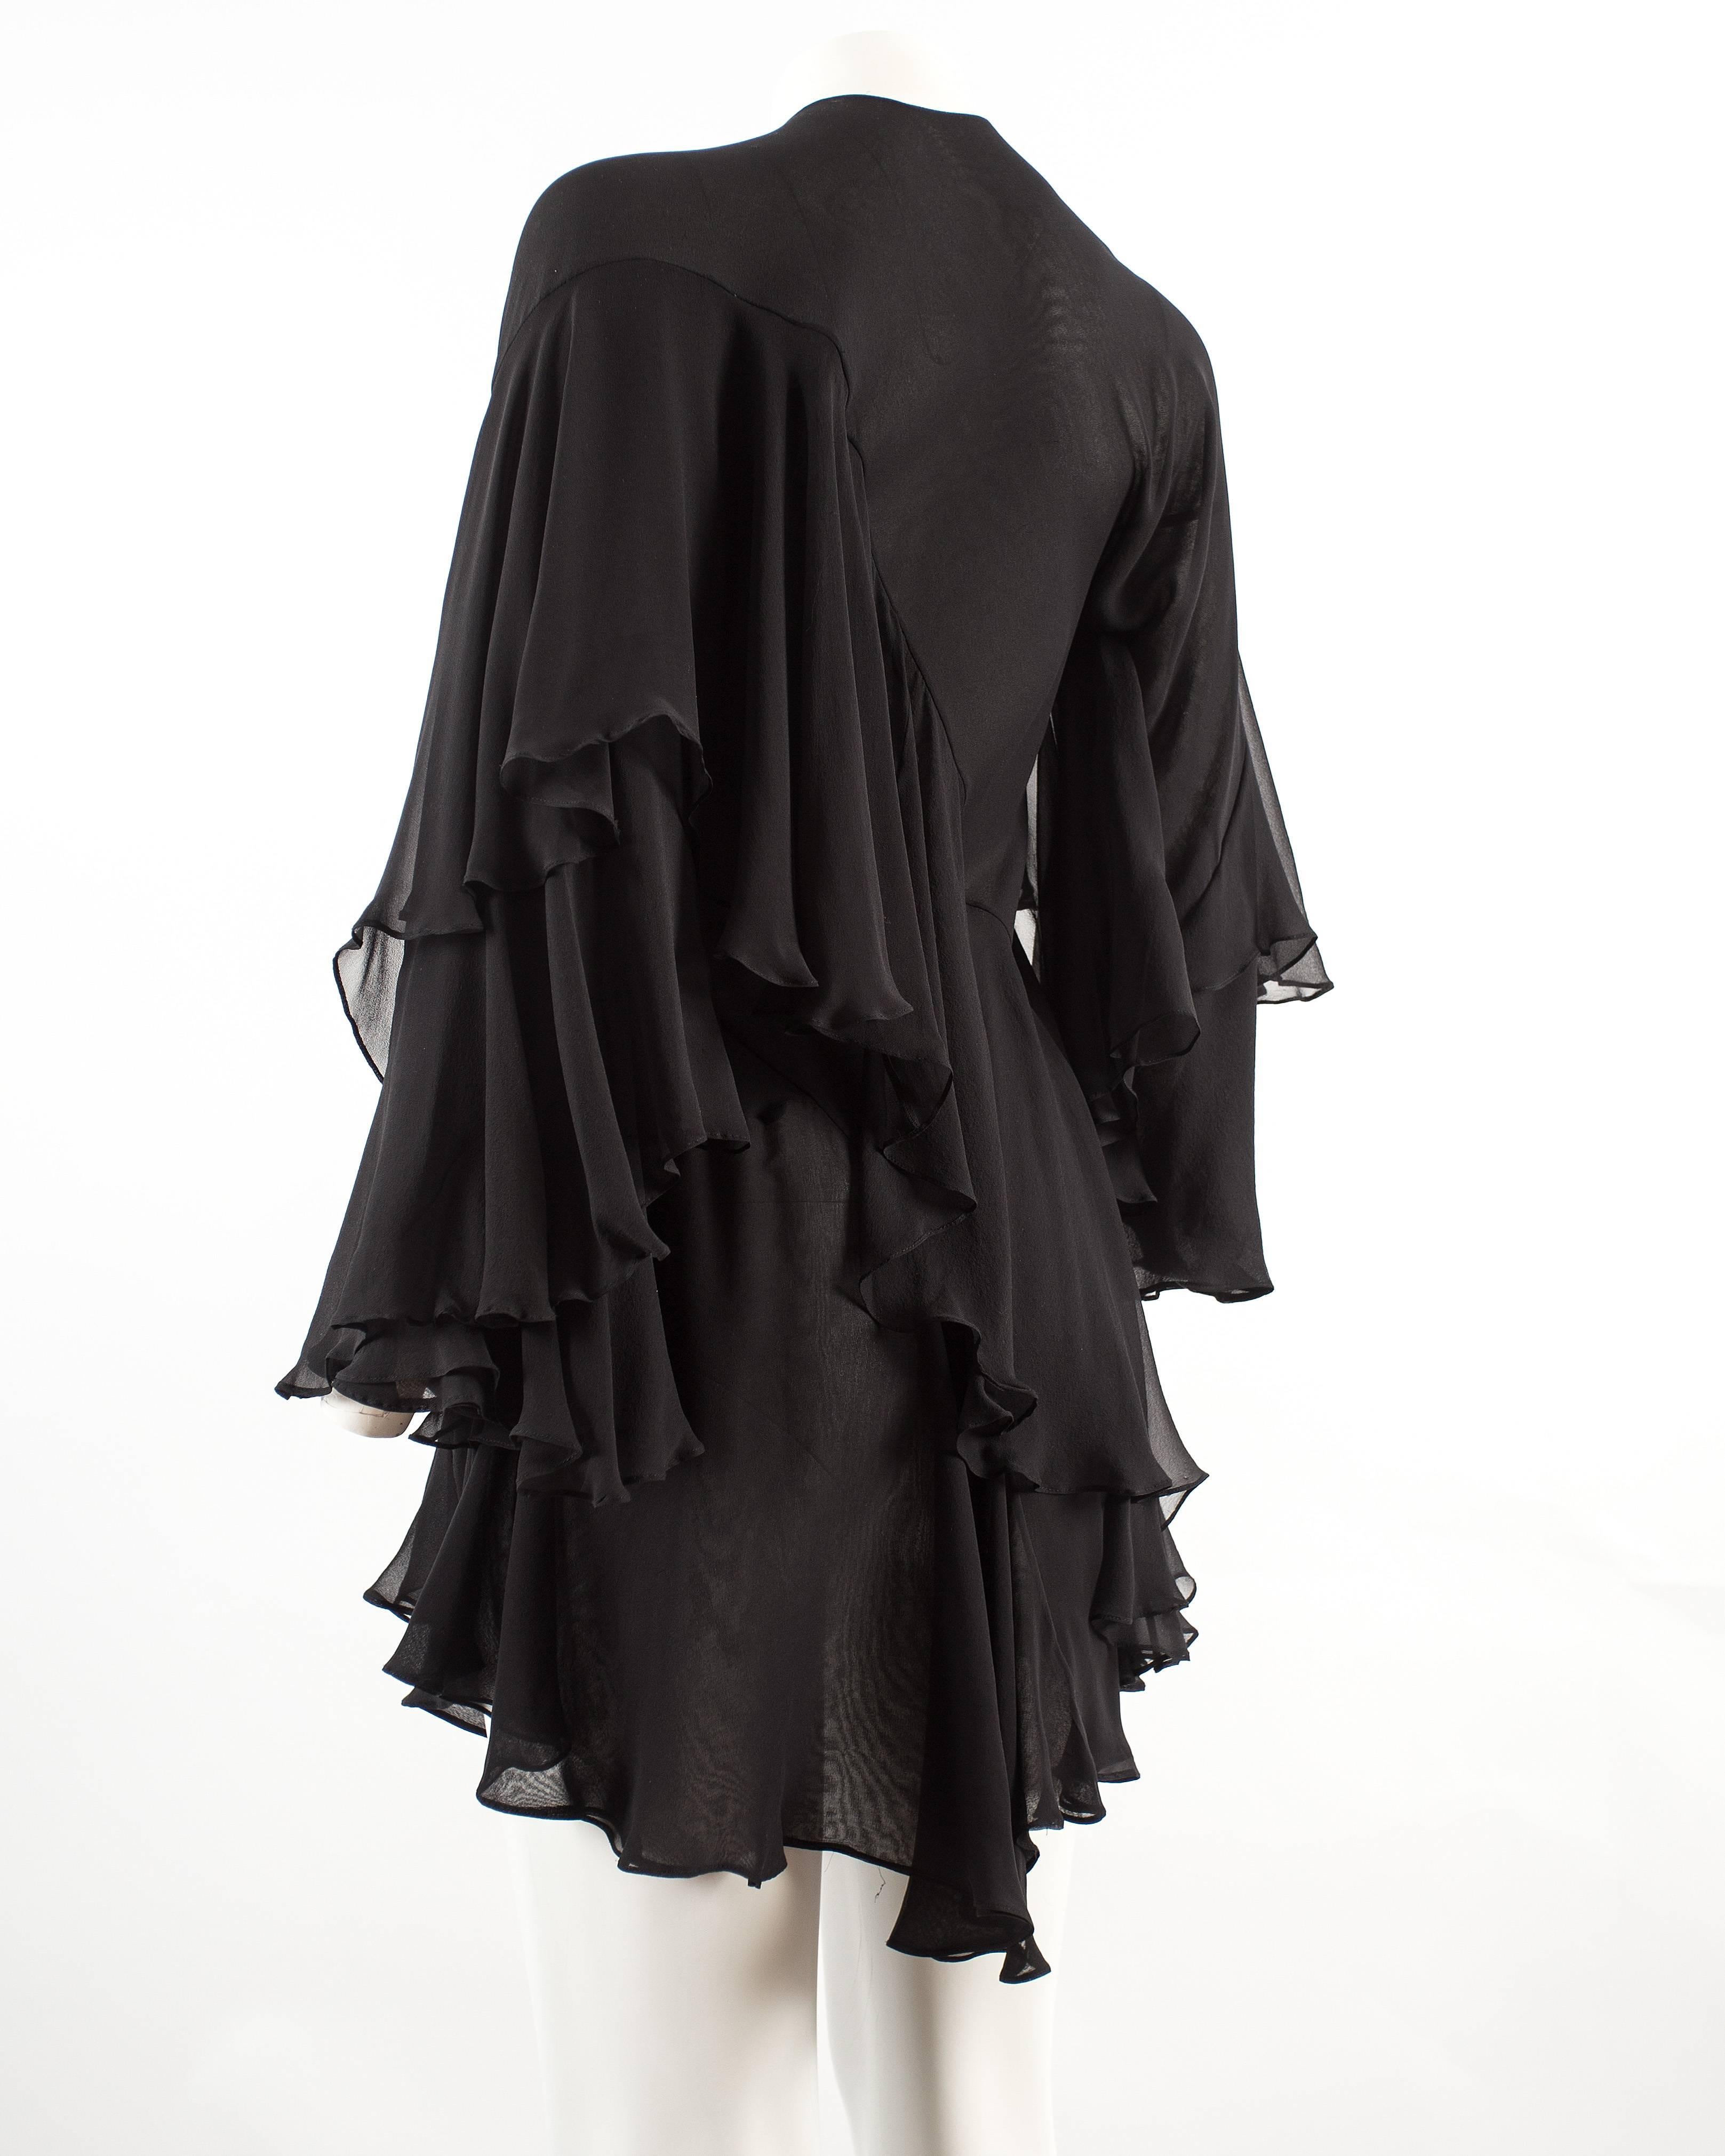 Tom Ford for Gucci Autumn-Winter 1999 black silk georgette bias cut mini dress 1